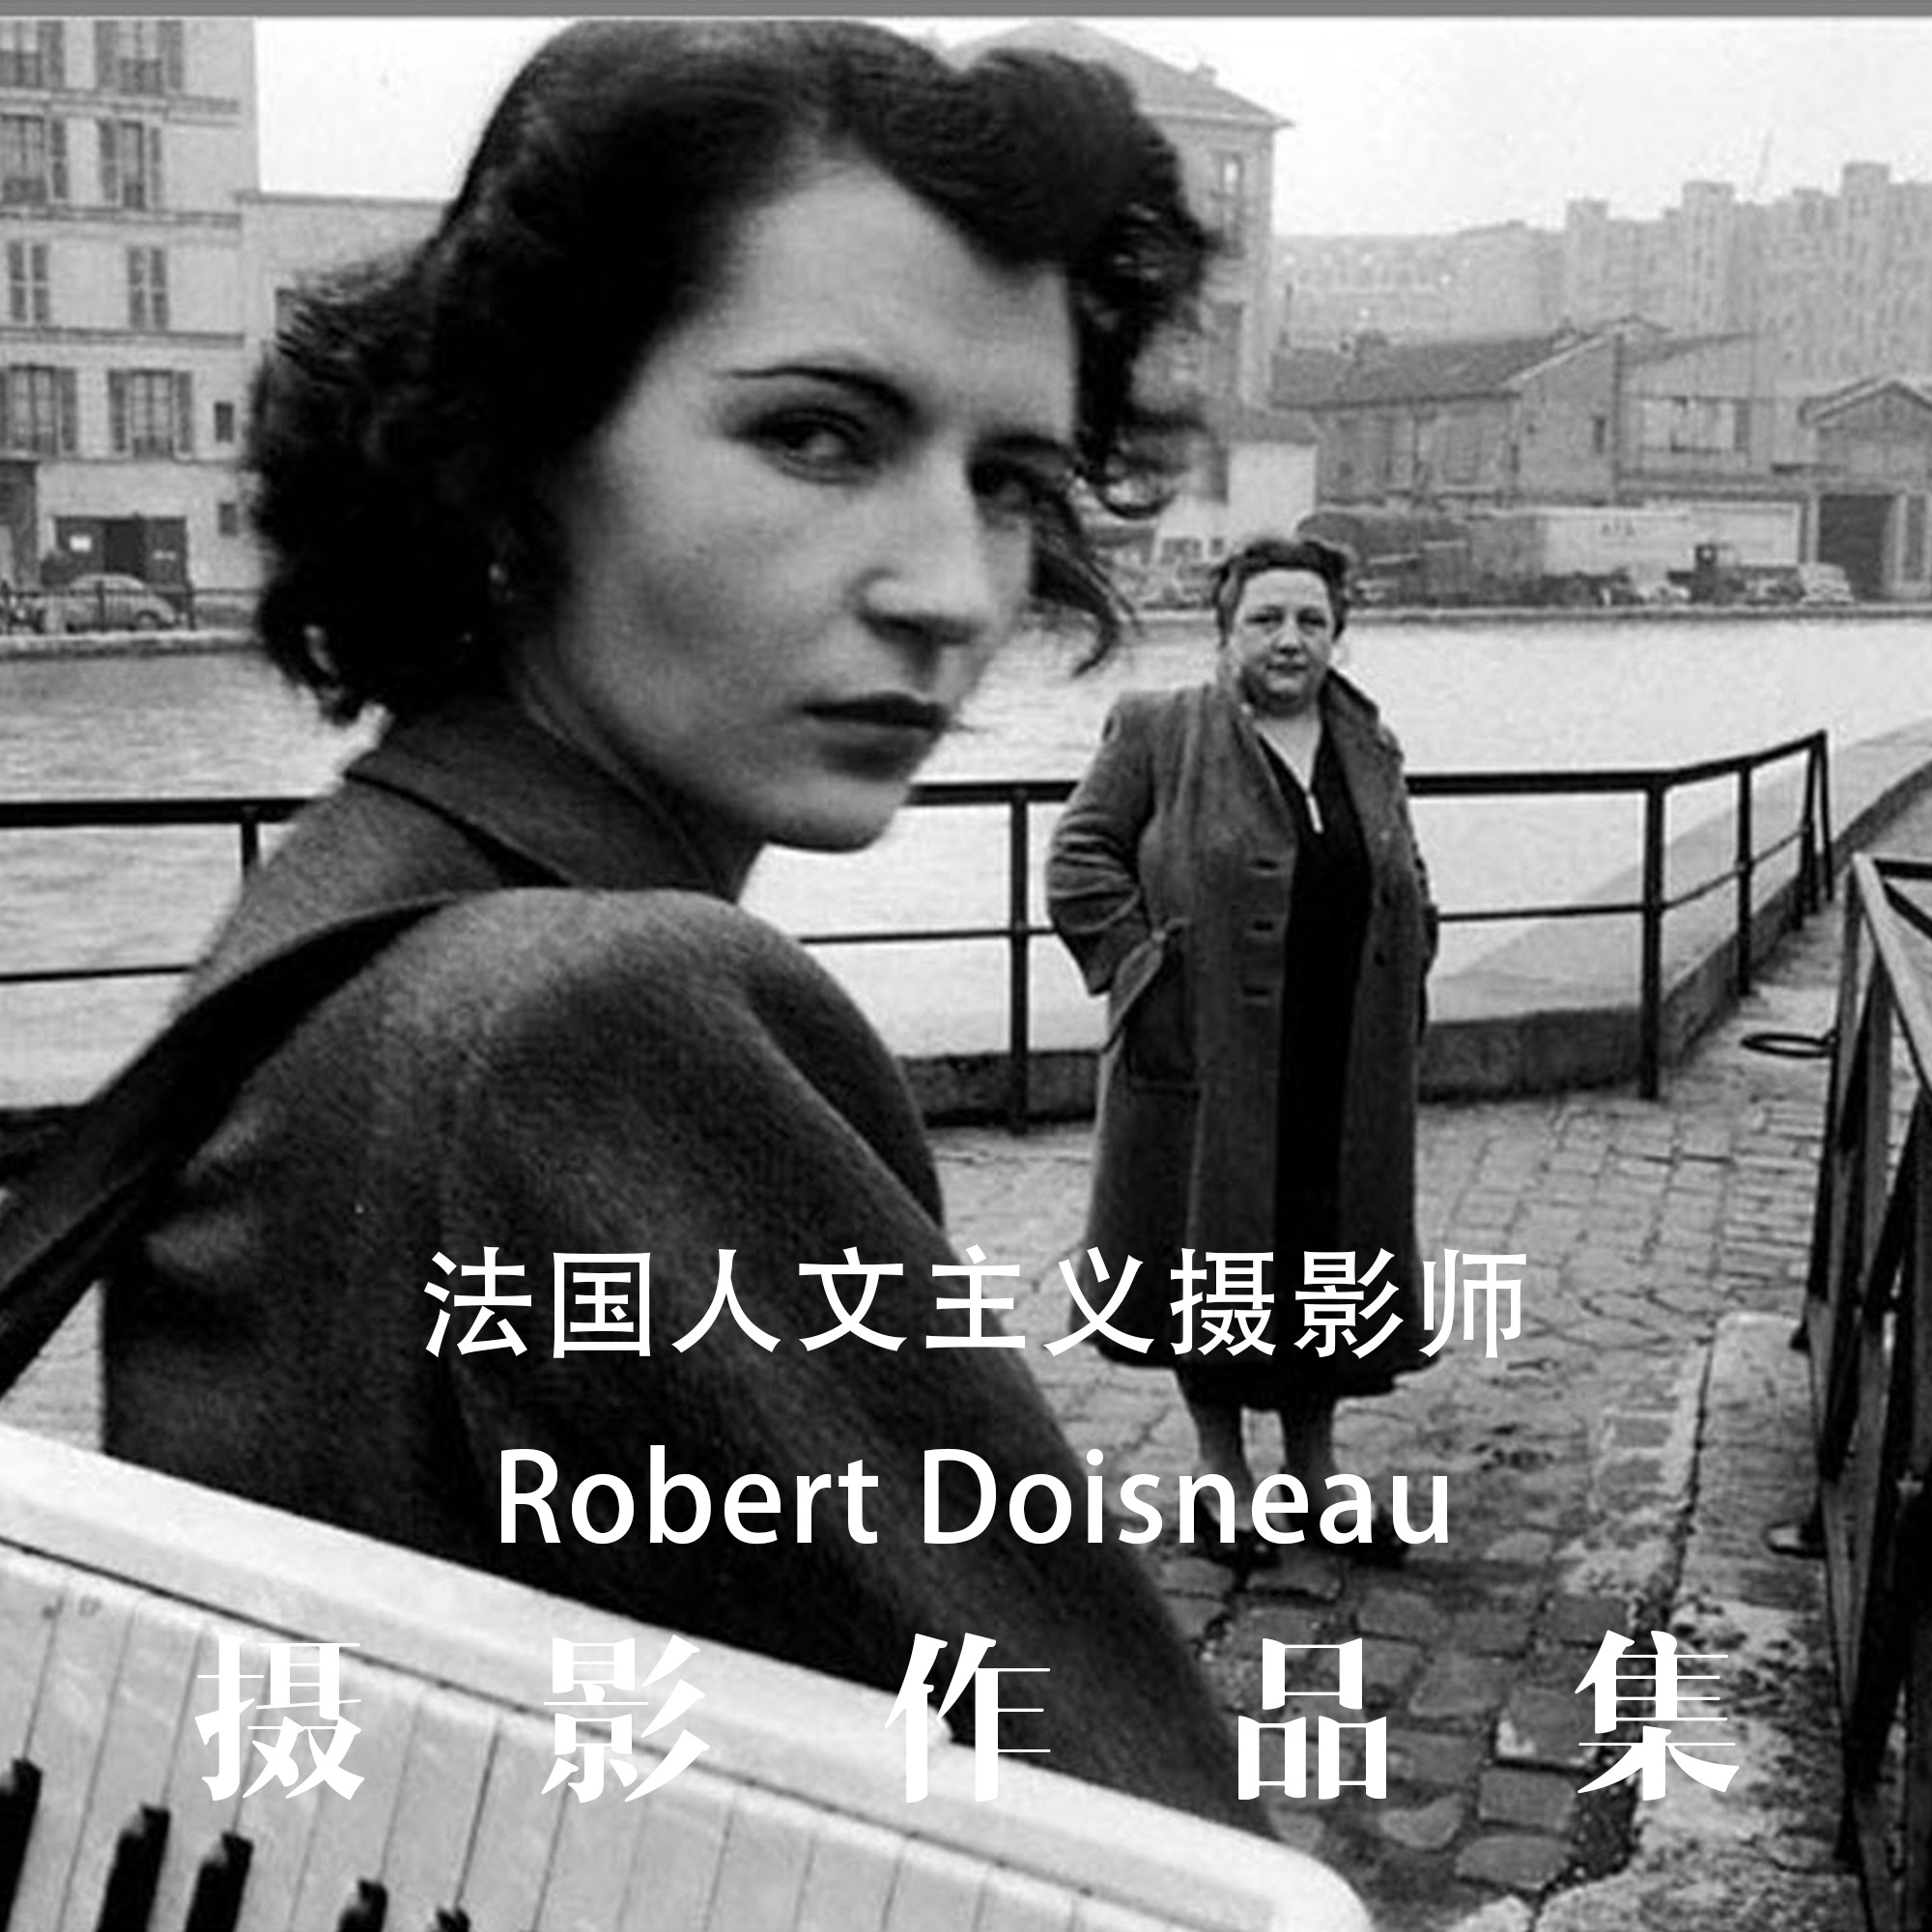 Robert Doisneau罗伯特.杜瓦诺世界摄影大师摄影集